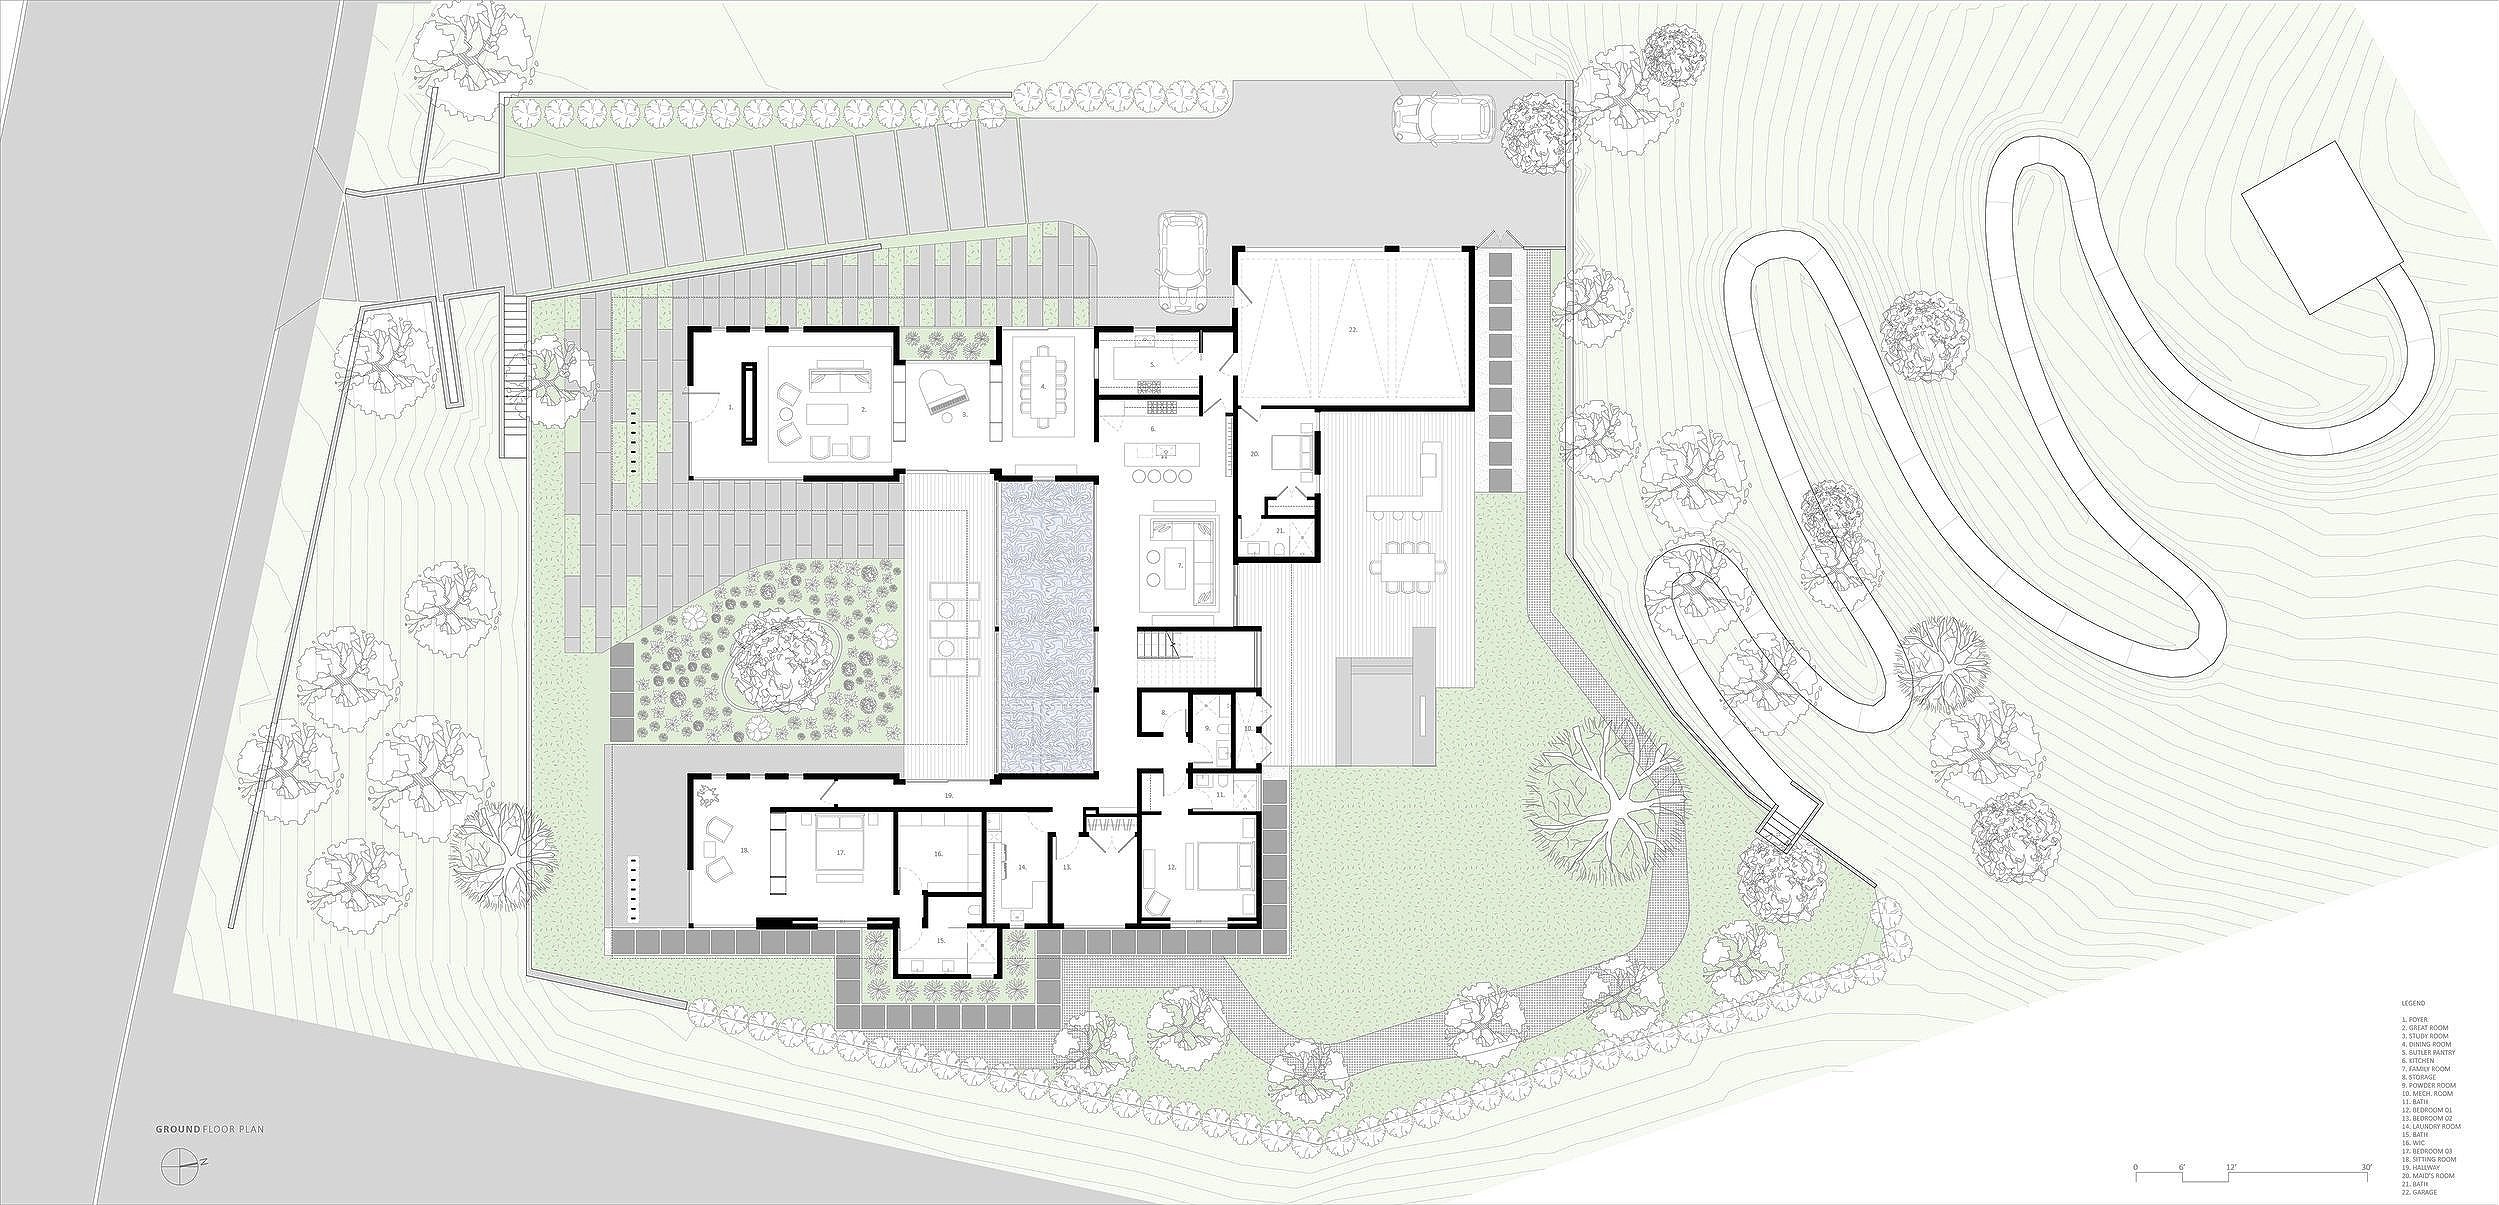 bspk-design-architecture-california-6000-residenital-courtyard-house-ground+floor+plan.jpg